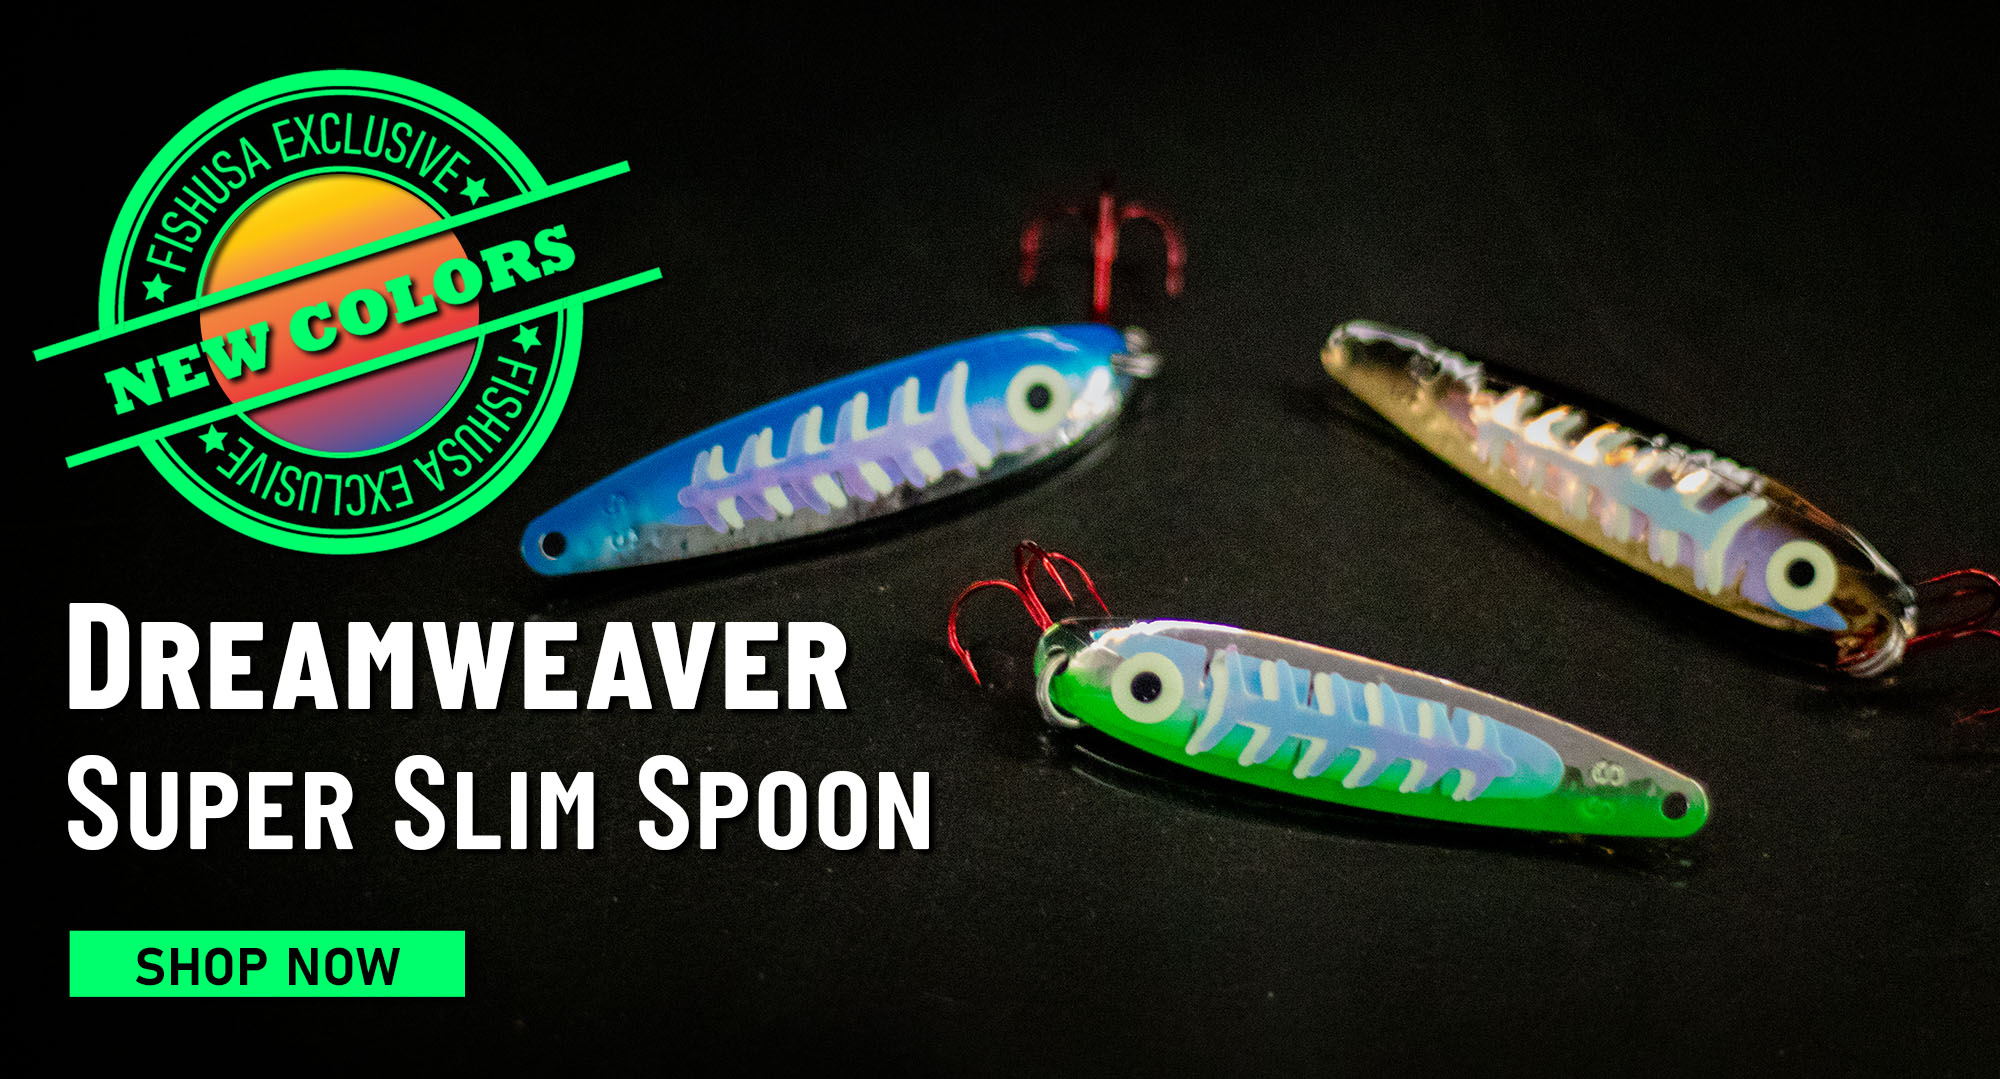 New Exclusive Colors! Dreamweaver Super Slim Spoon Shop Now